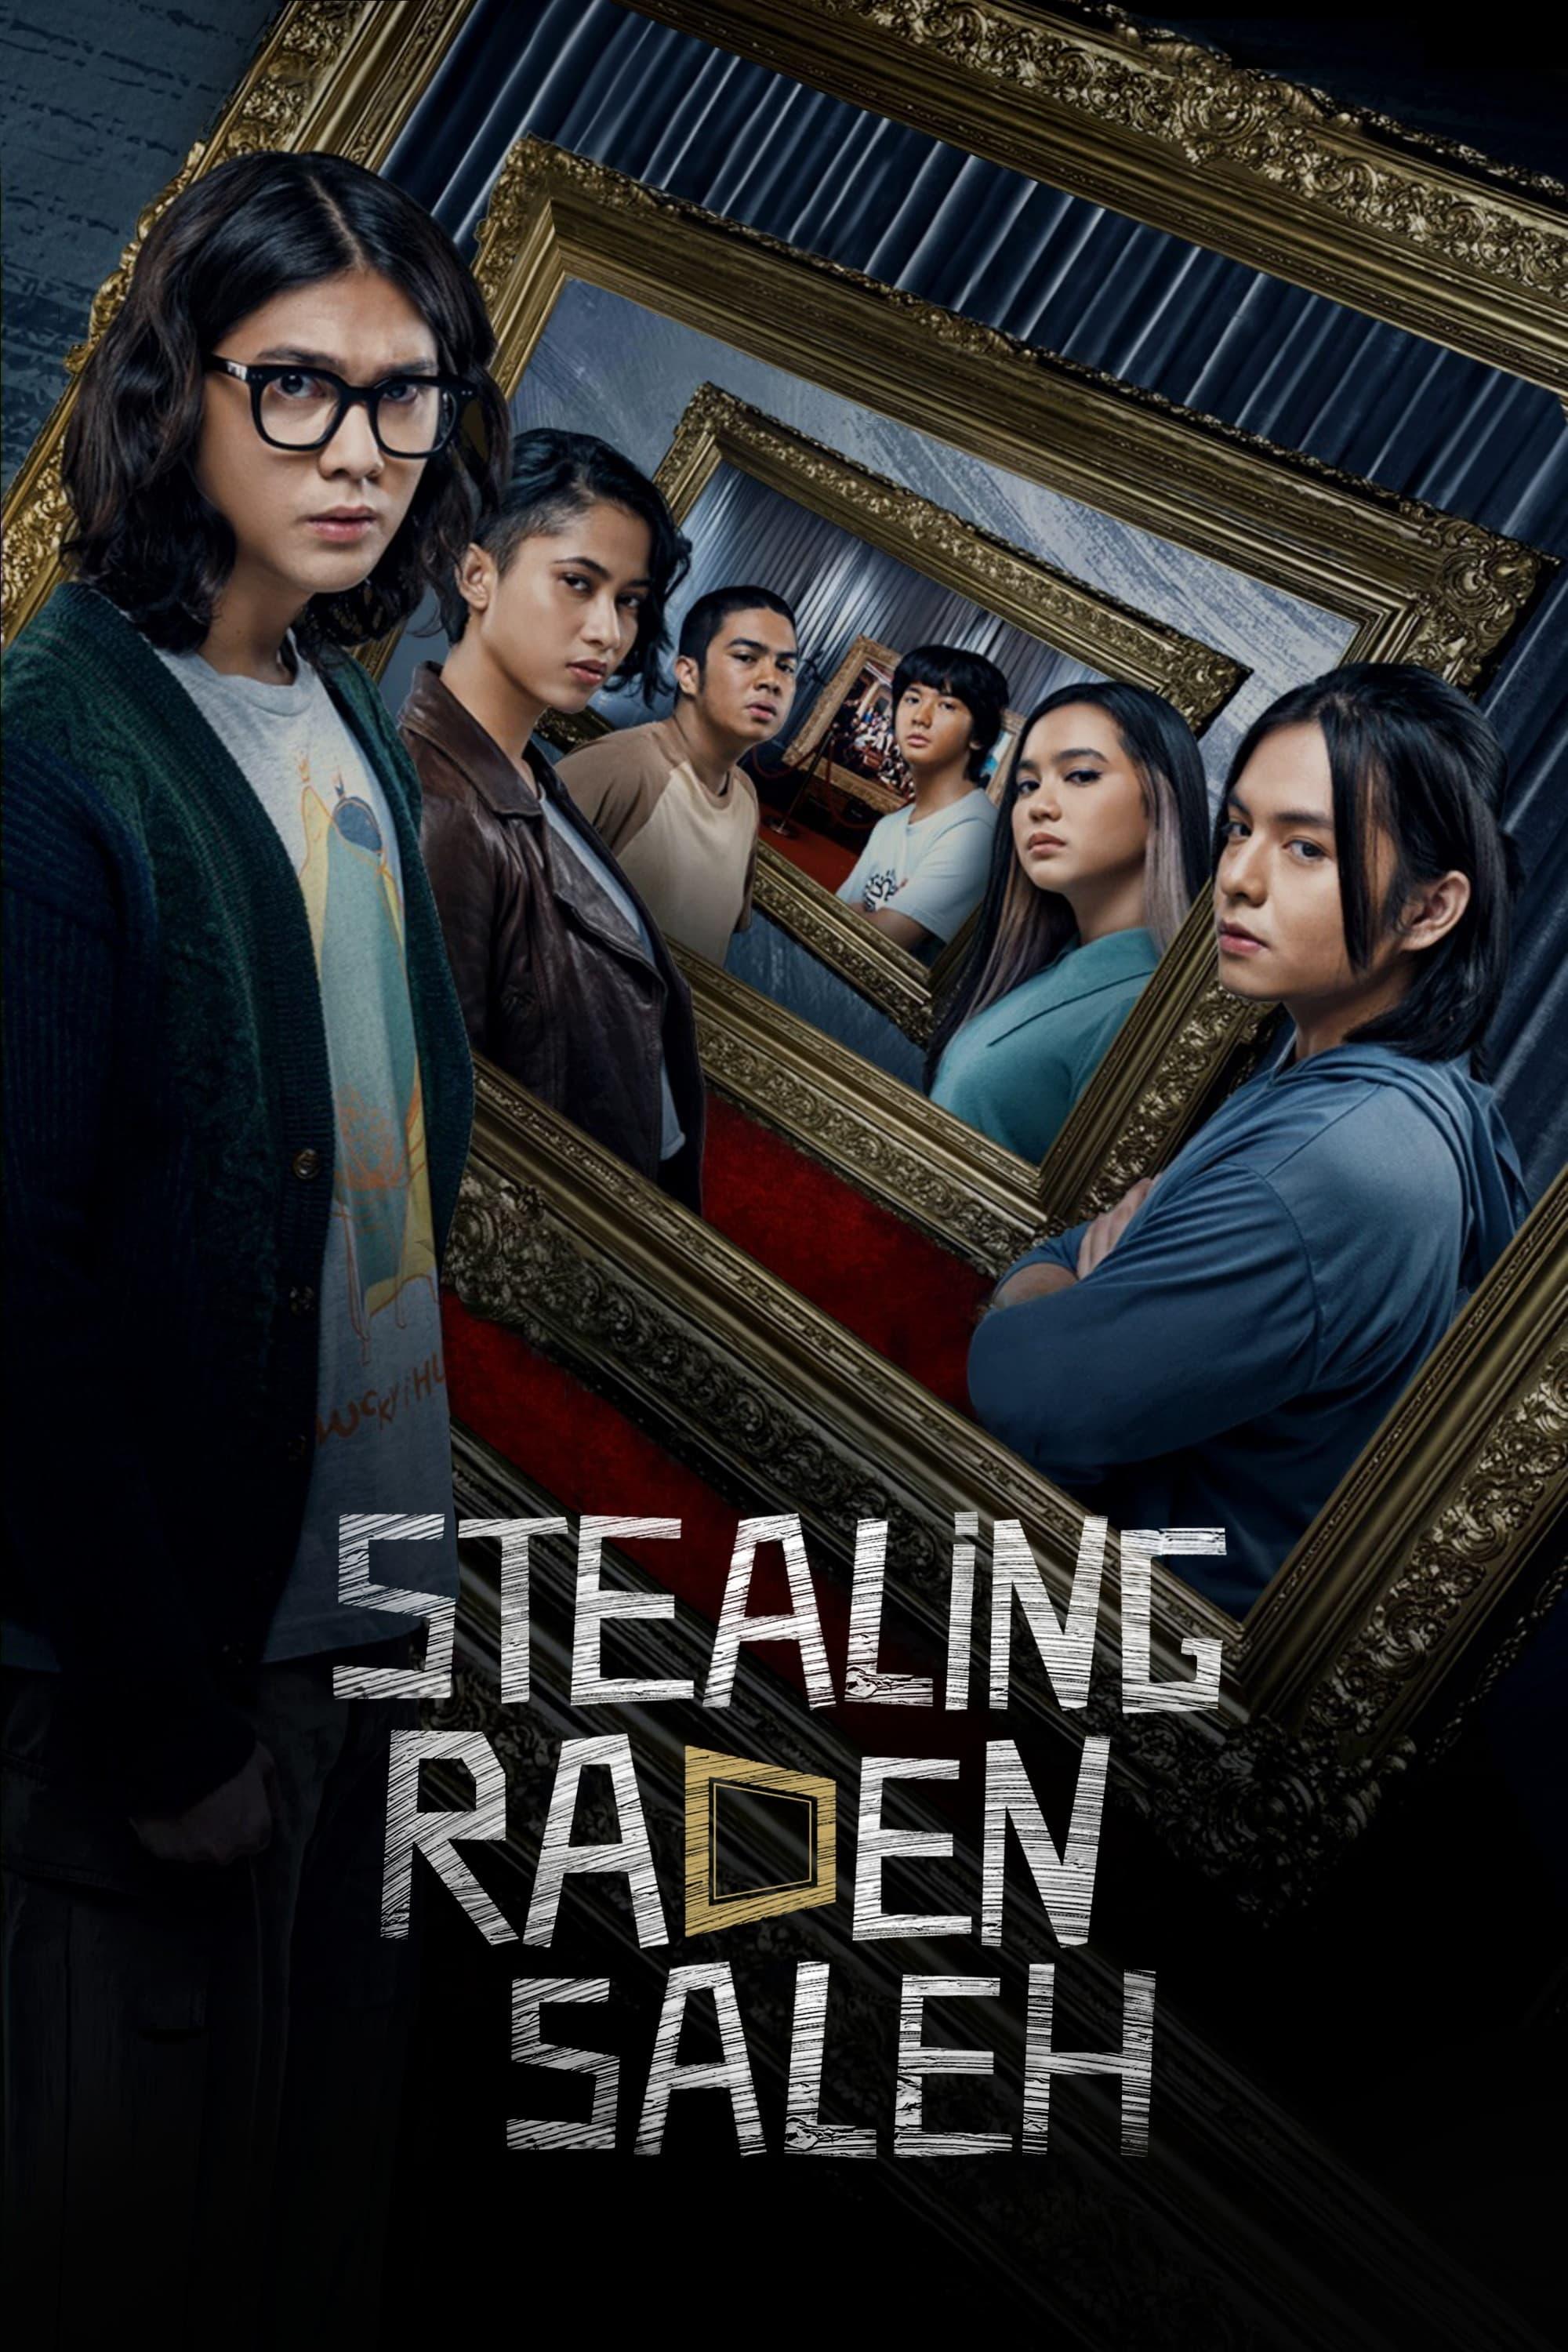 Stealing Raden Saleh poster